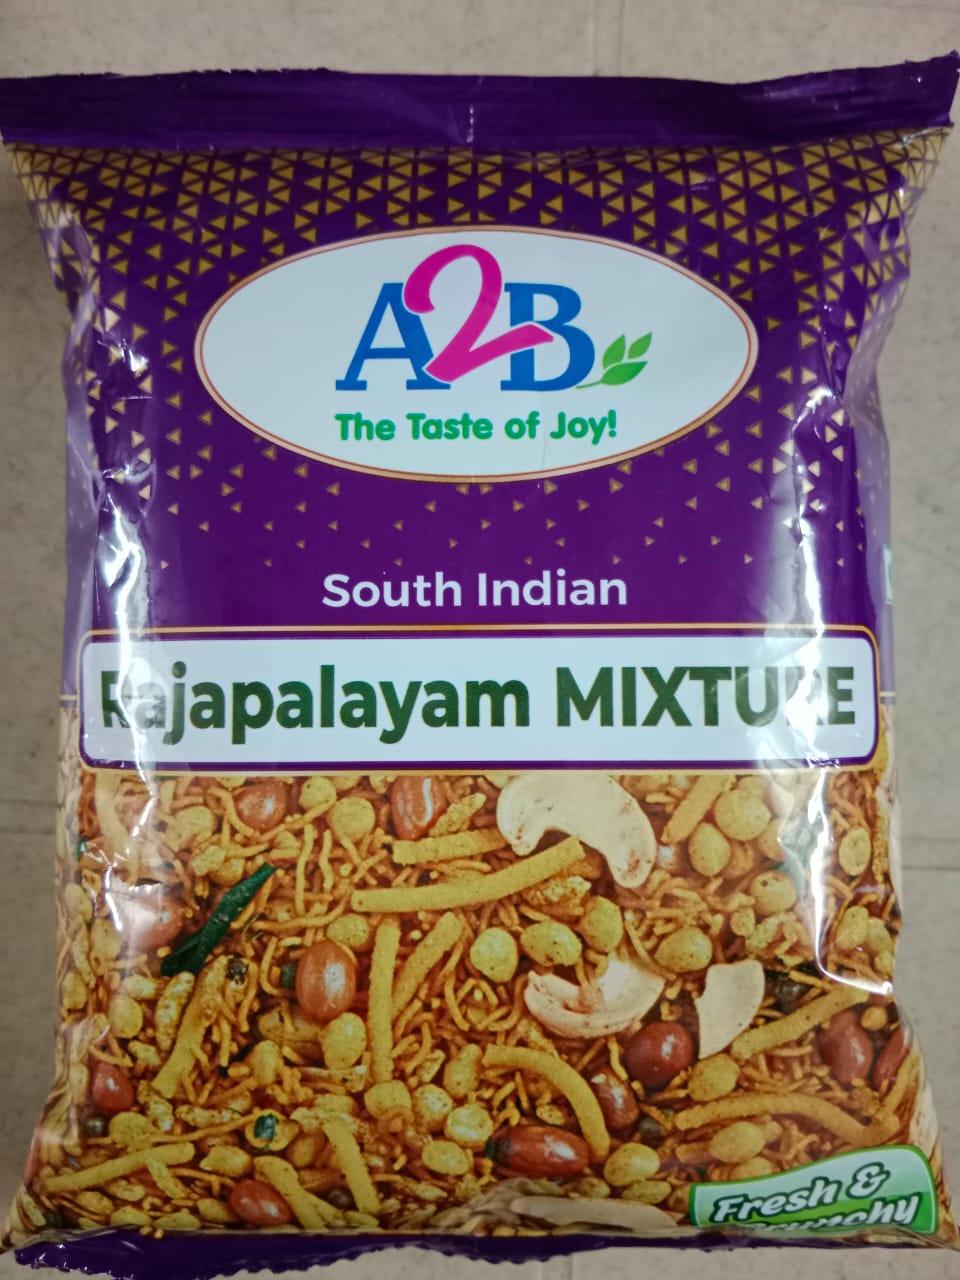 A2B Rajapaliyam Mixture